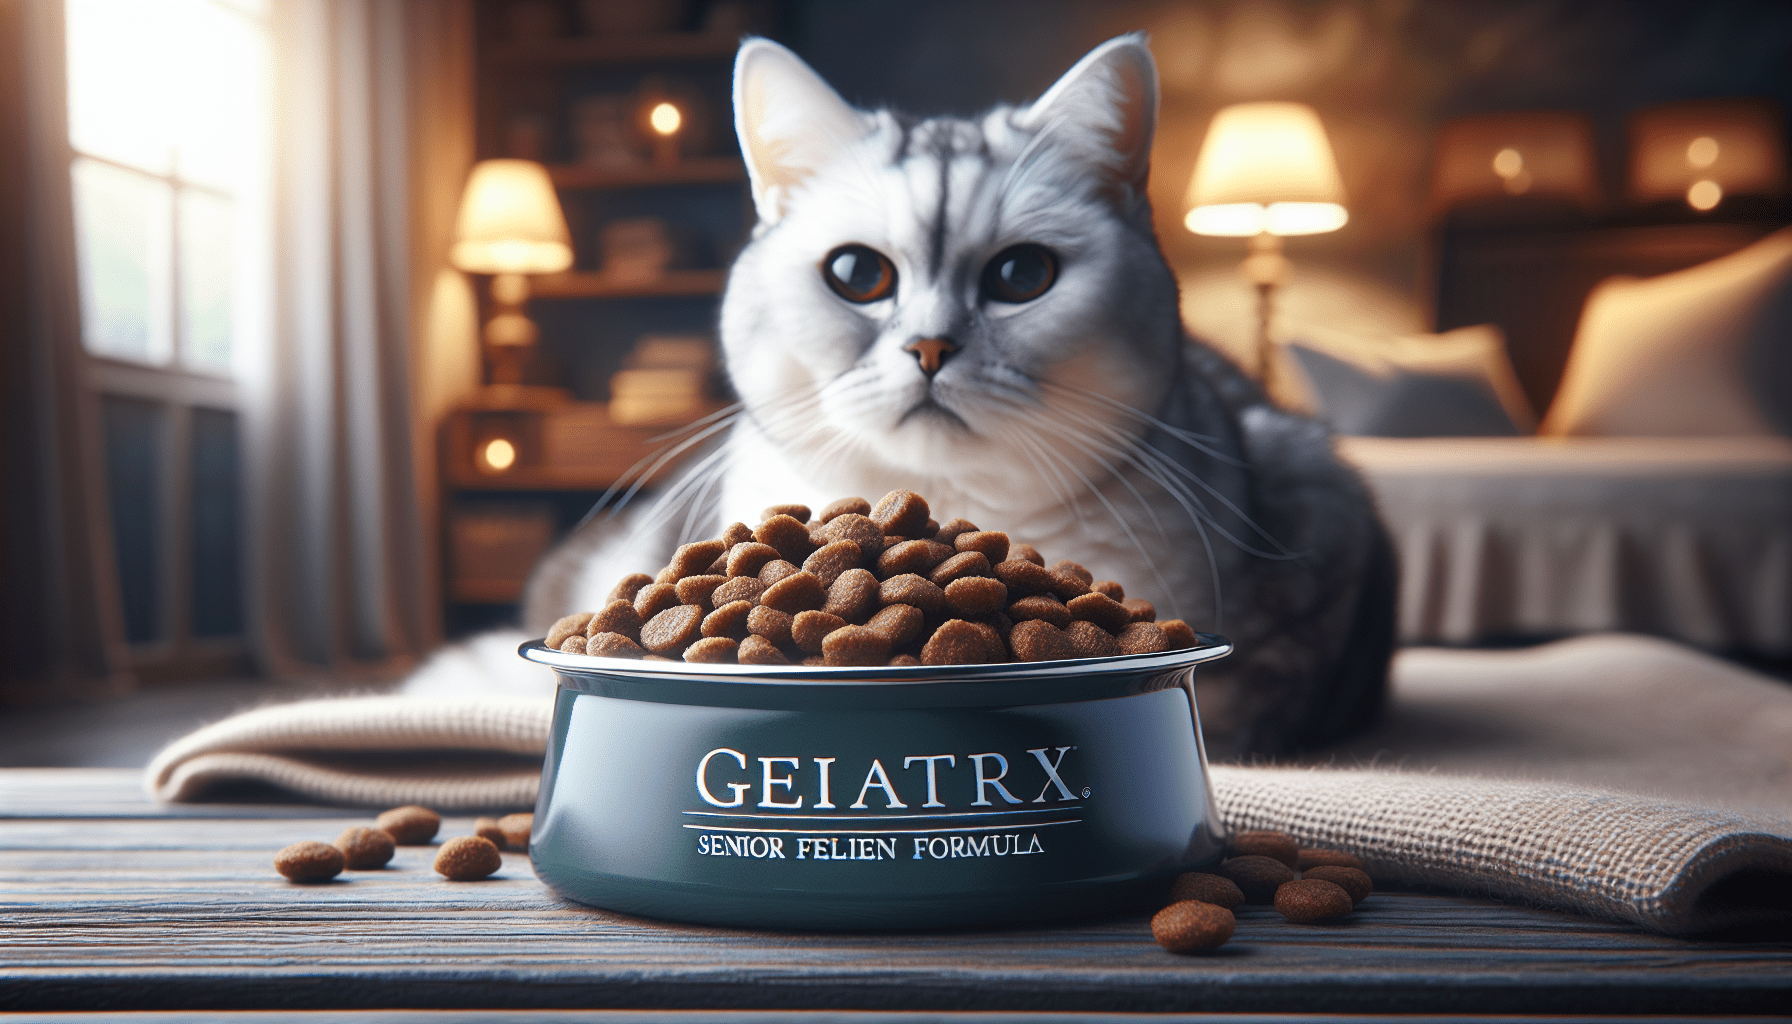 Wysong Geriatrx Senior Feline Formula Dry Cat Food - 5 Pound Bag